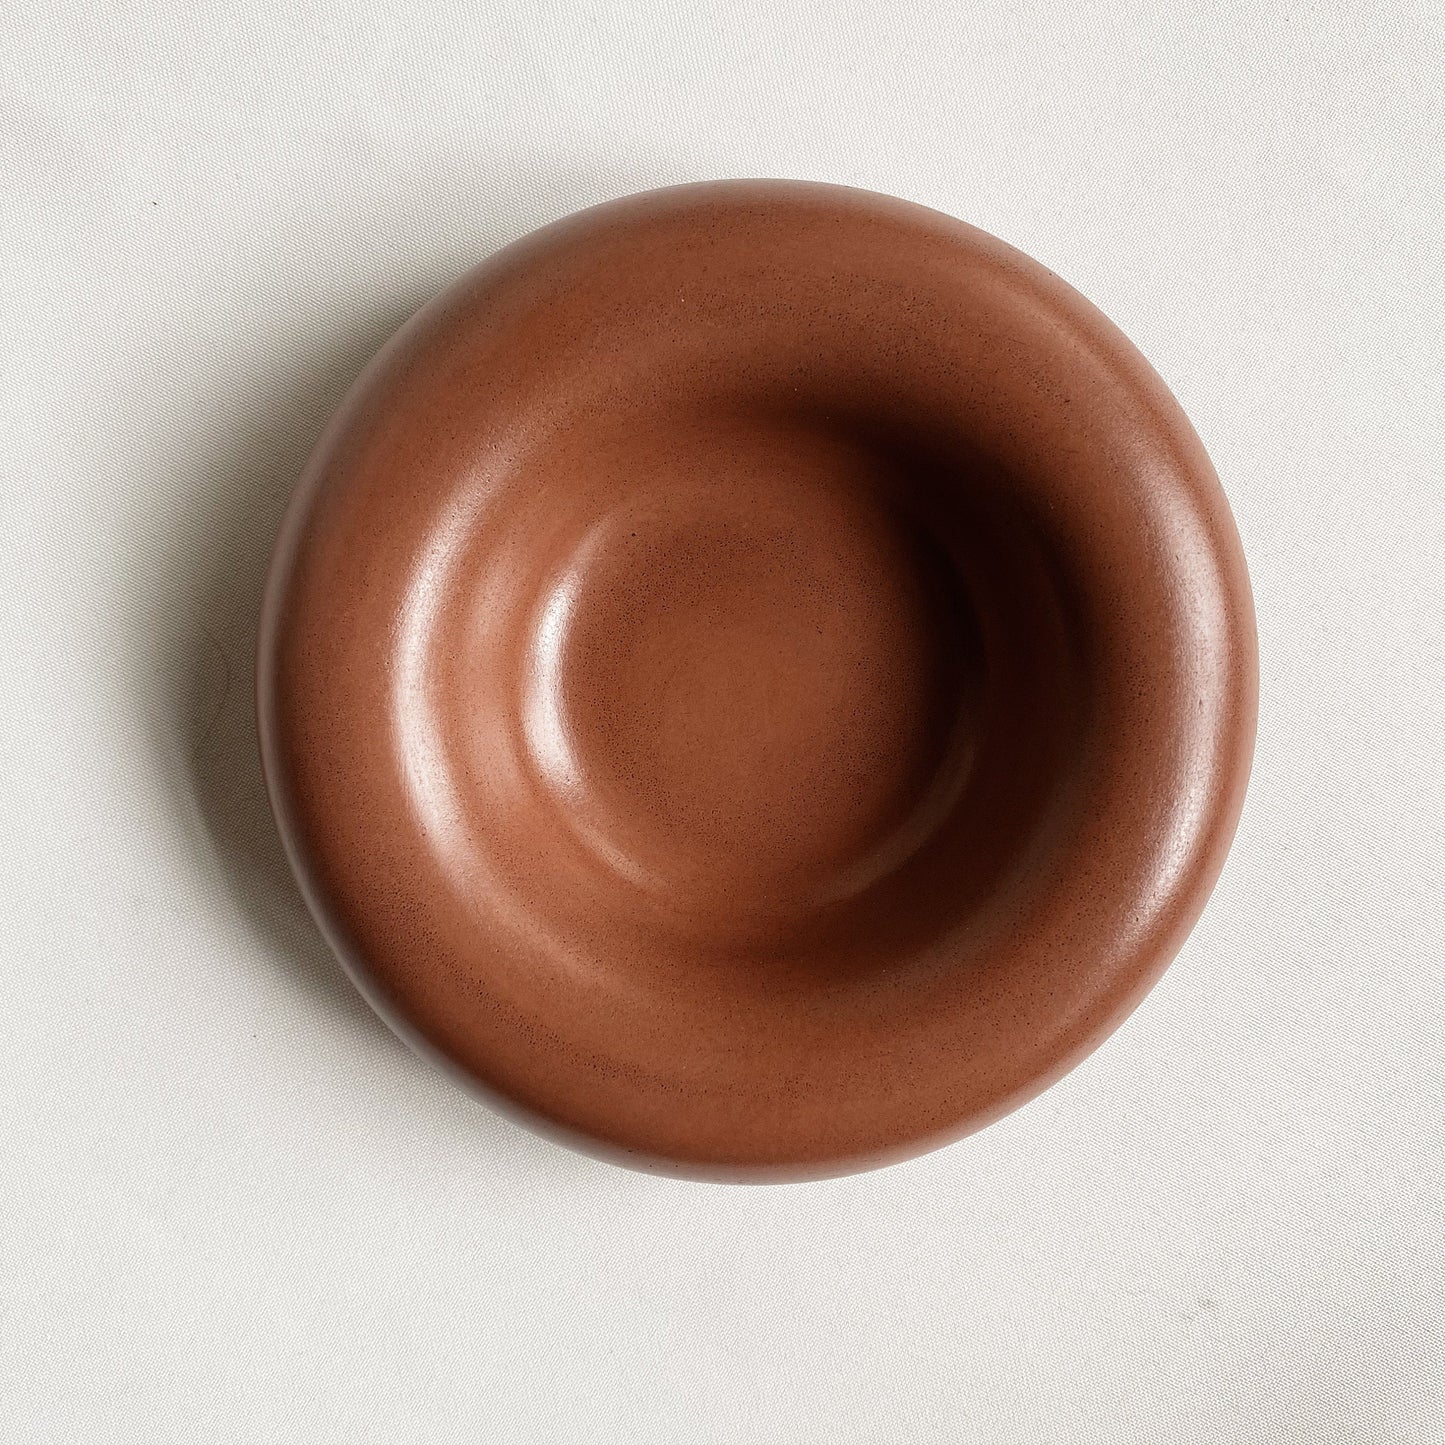 GYRUS - Concrete bowl